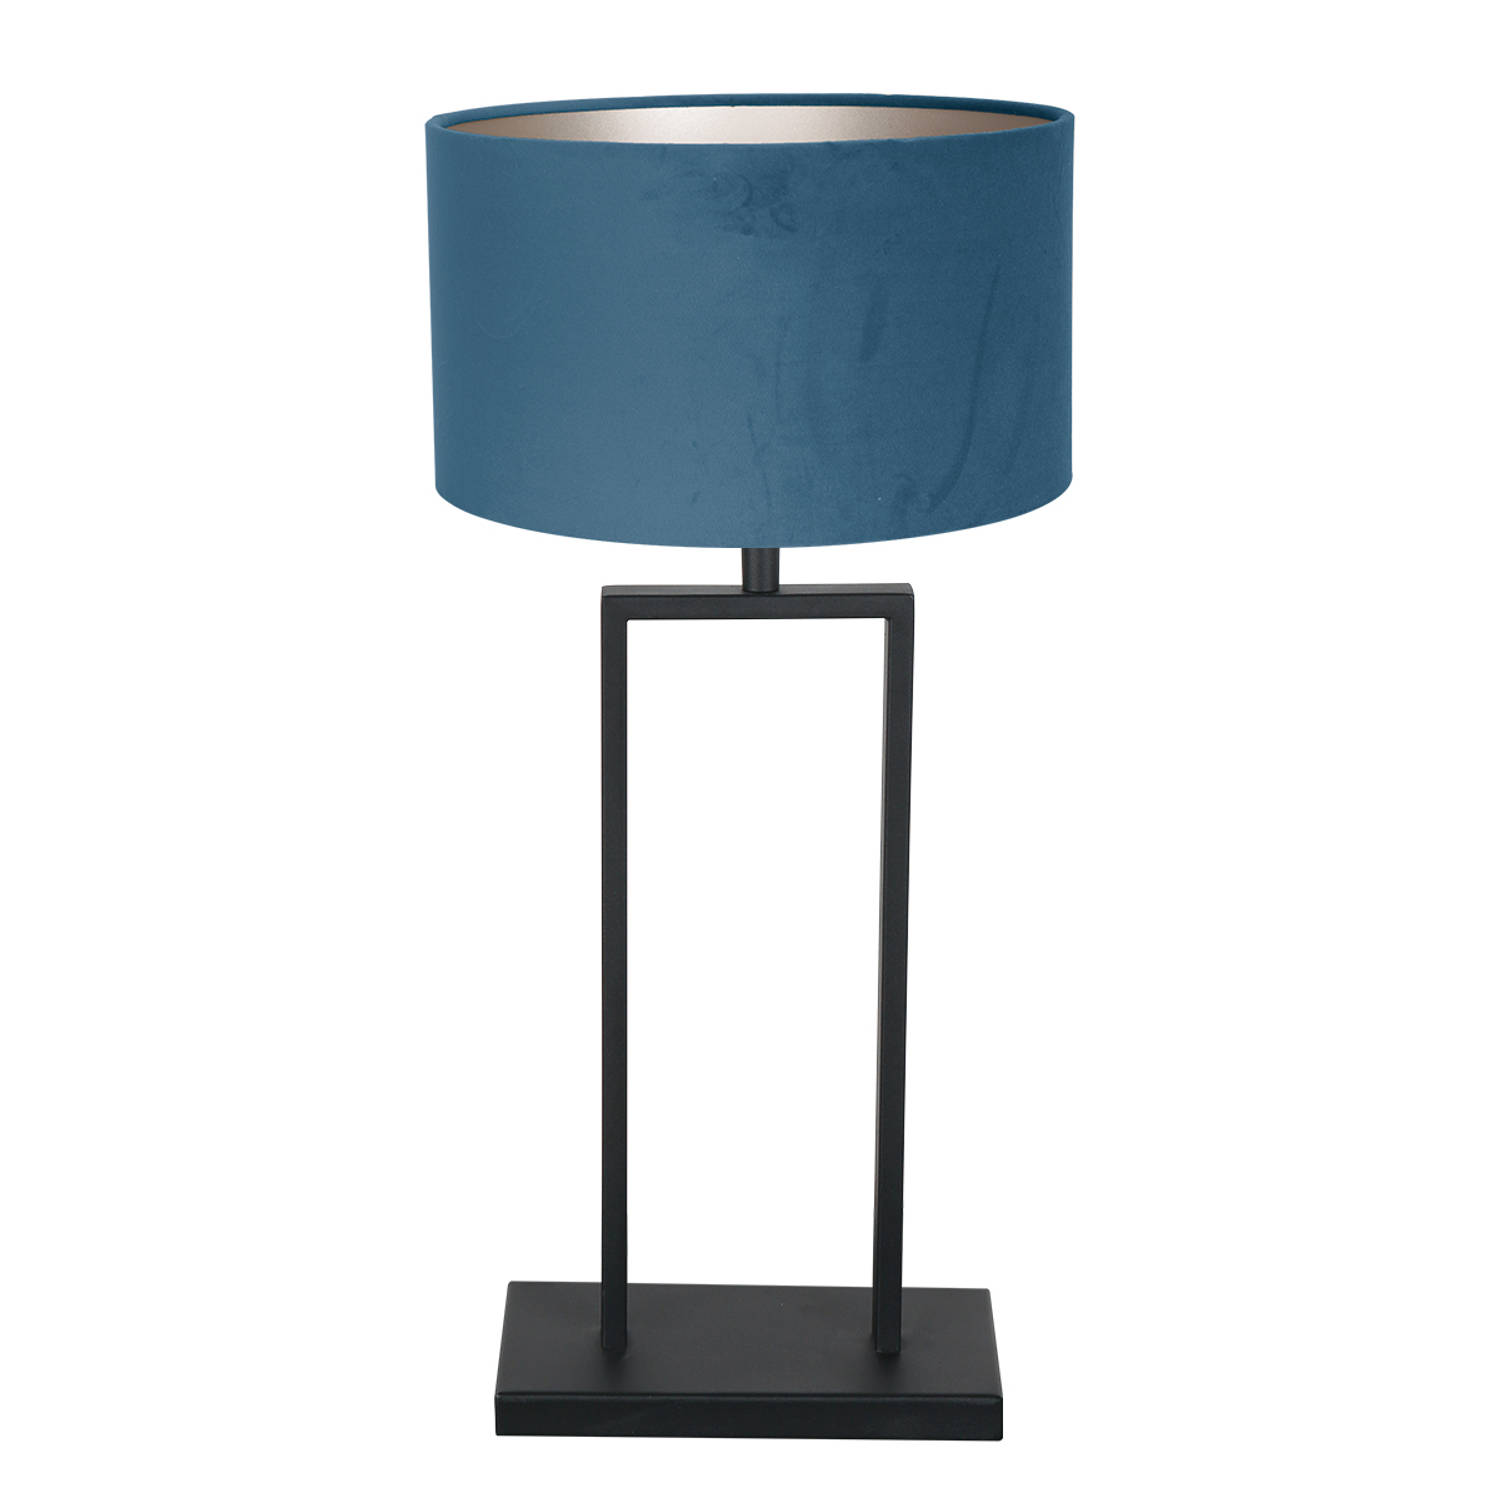 Tafellamp Stang | 1-lichts | blauw / zwart | E27 grote fitting | modern design | woonkamer / slaapkamer | industrieel look